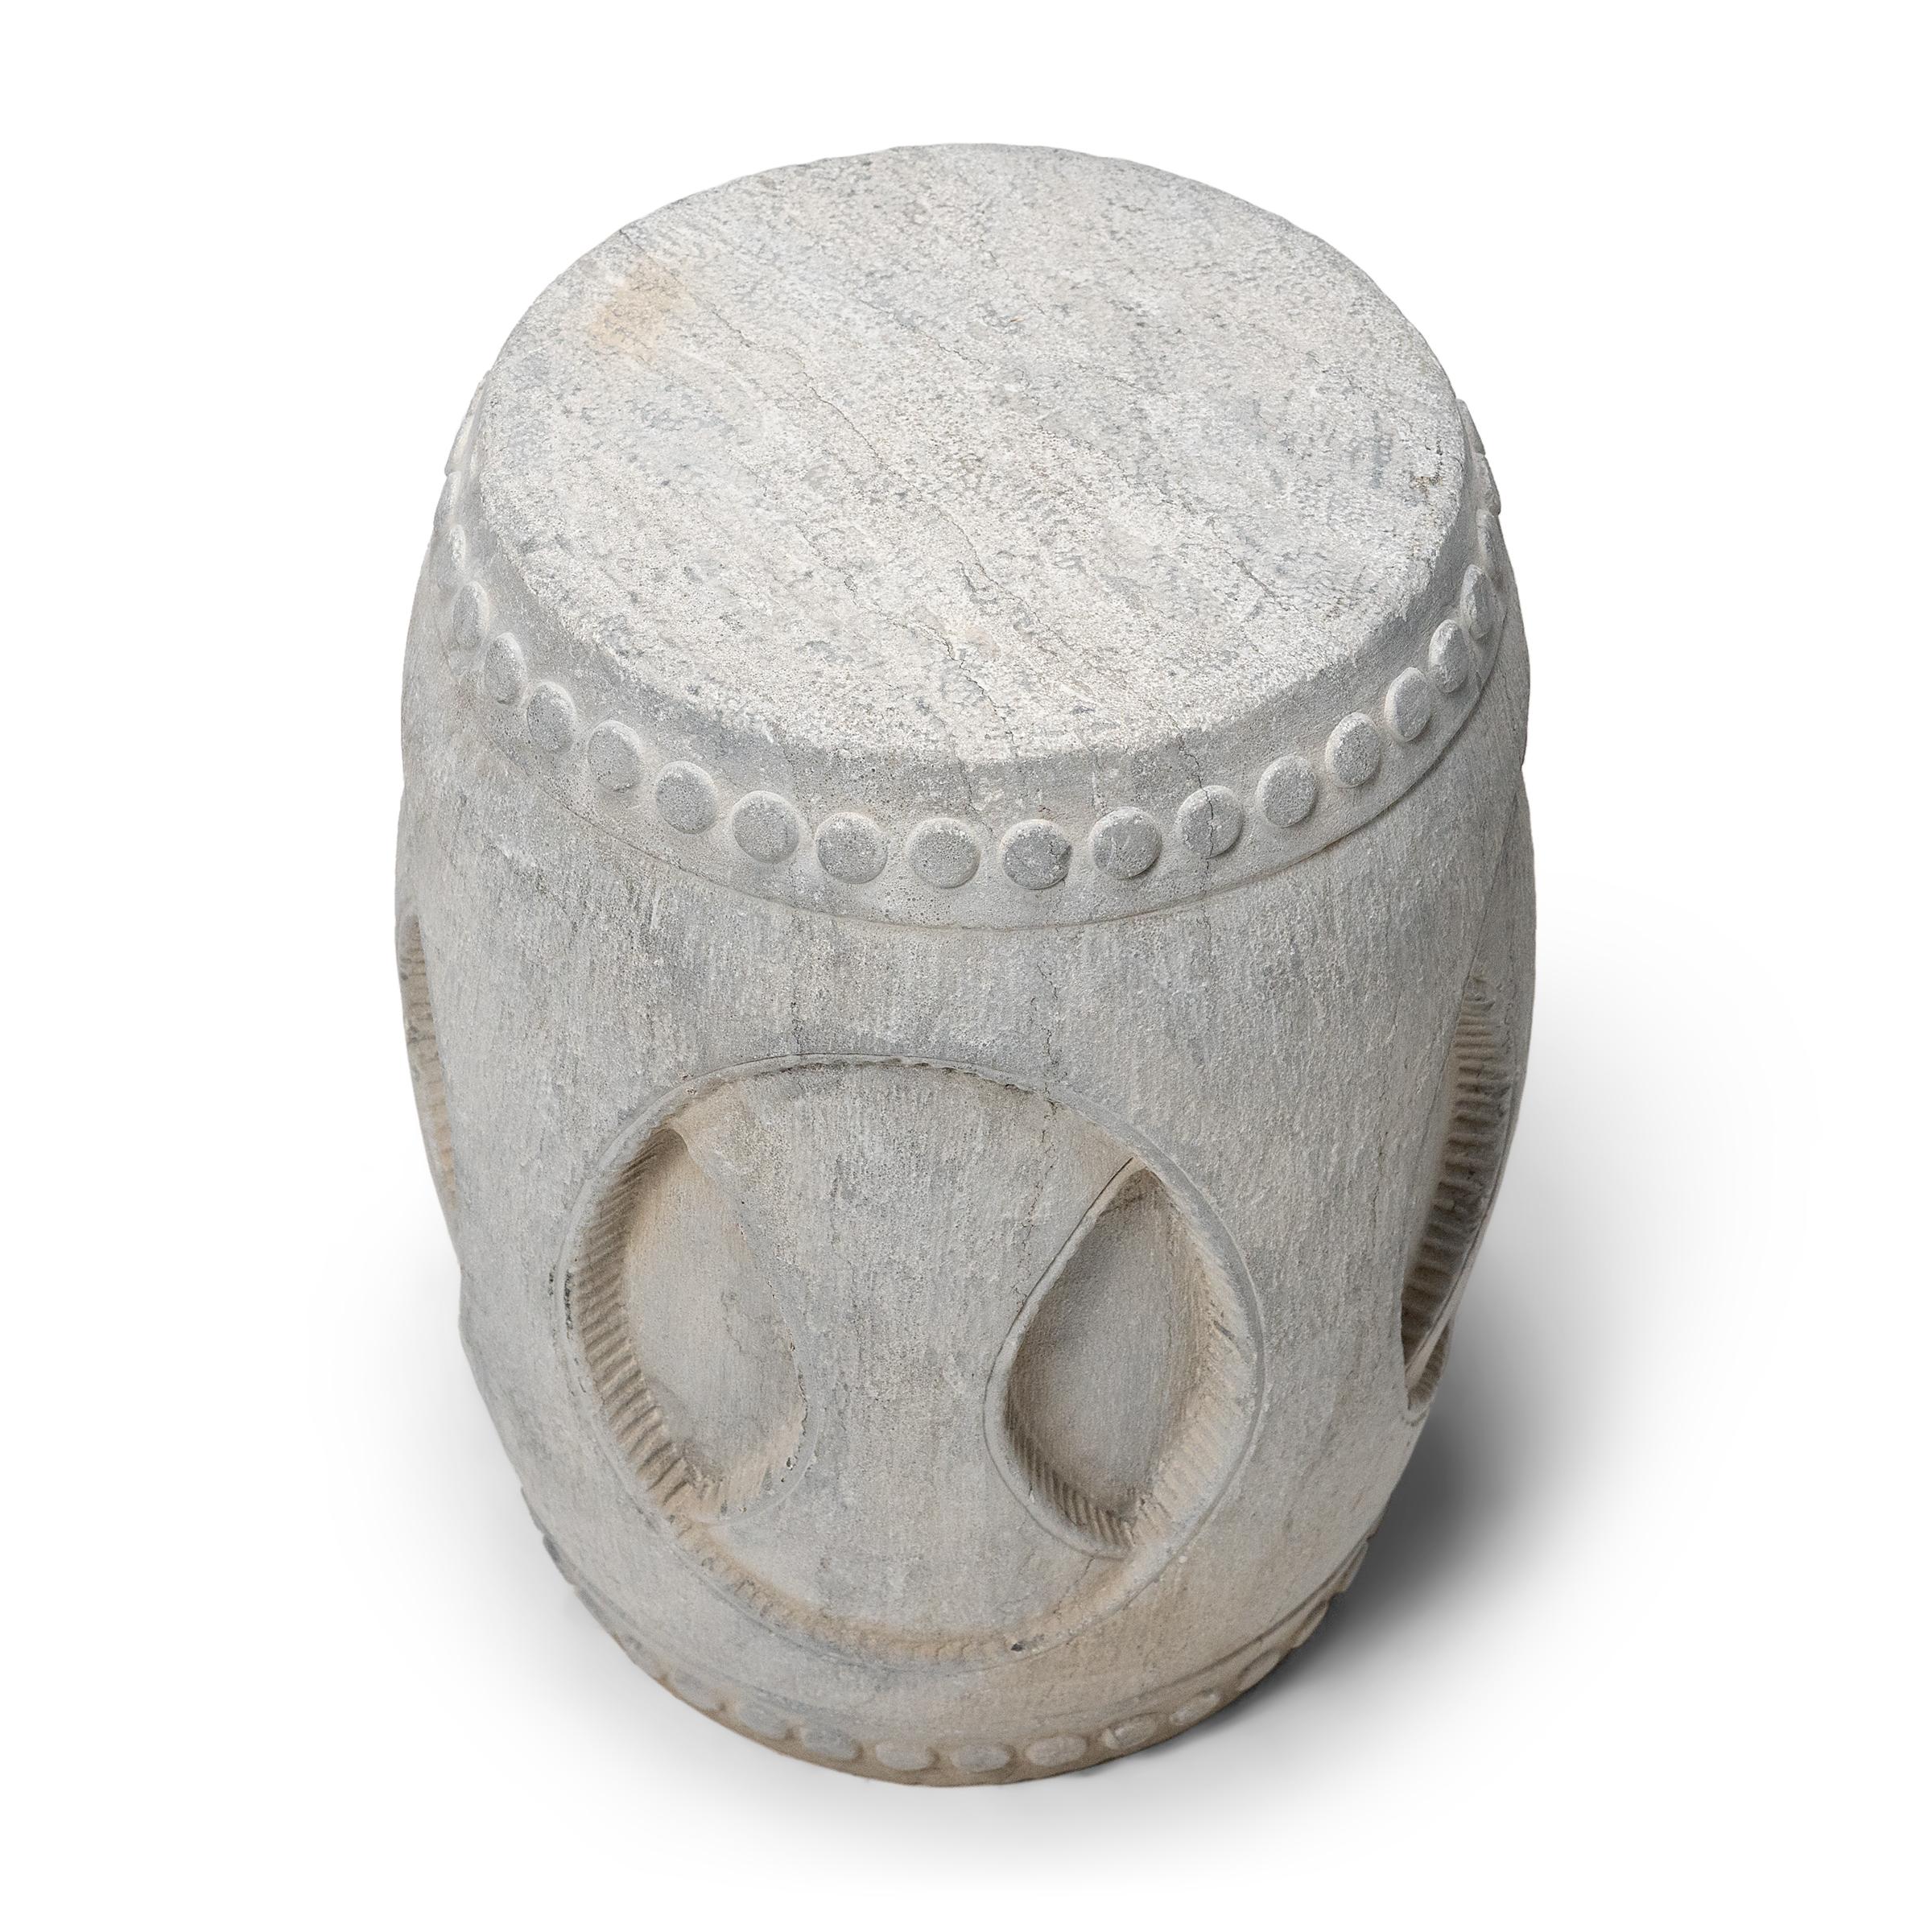 Carved Chinese Interlocking Stone Drum Table